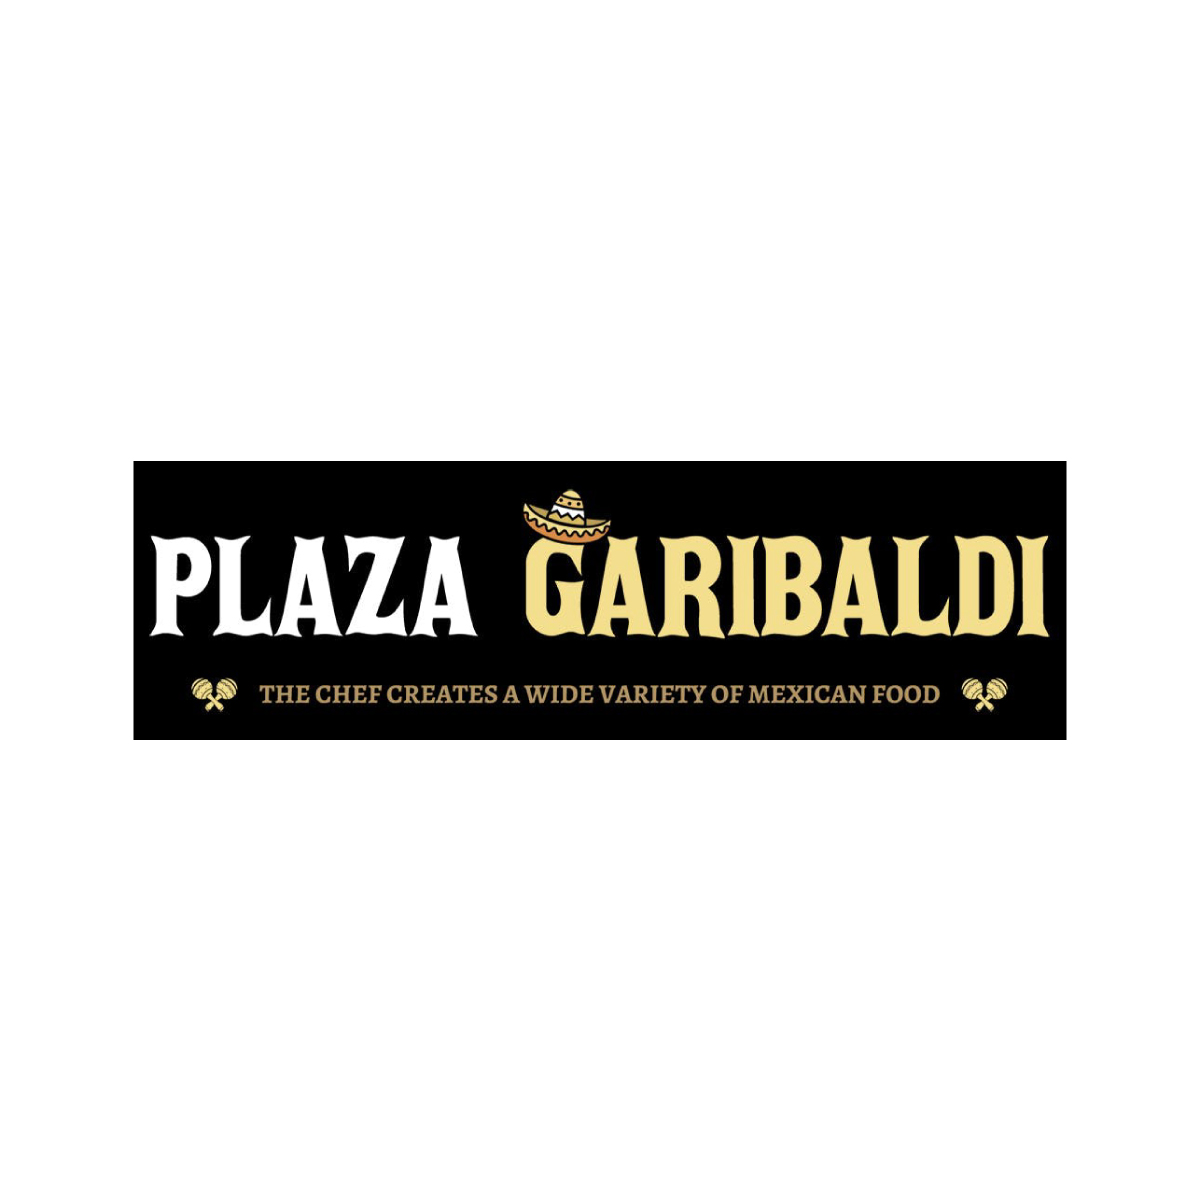 plaza-garibaldi